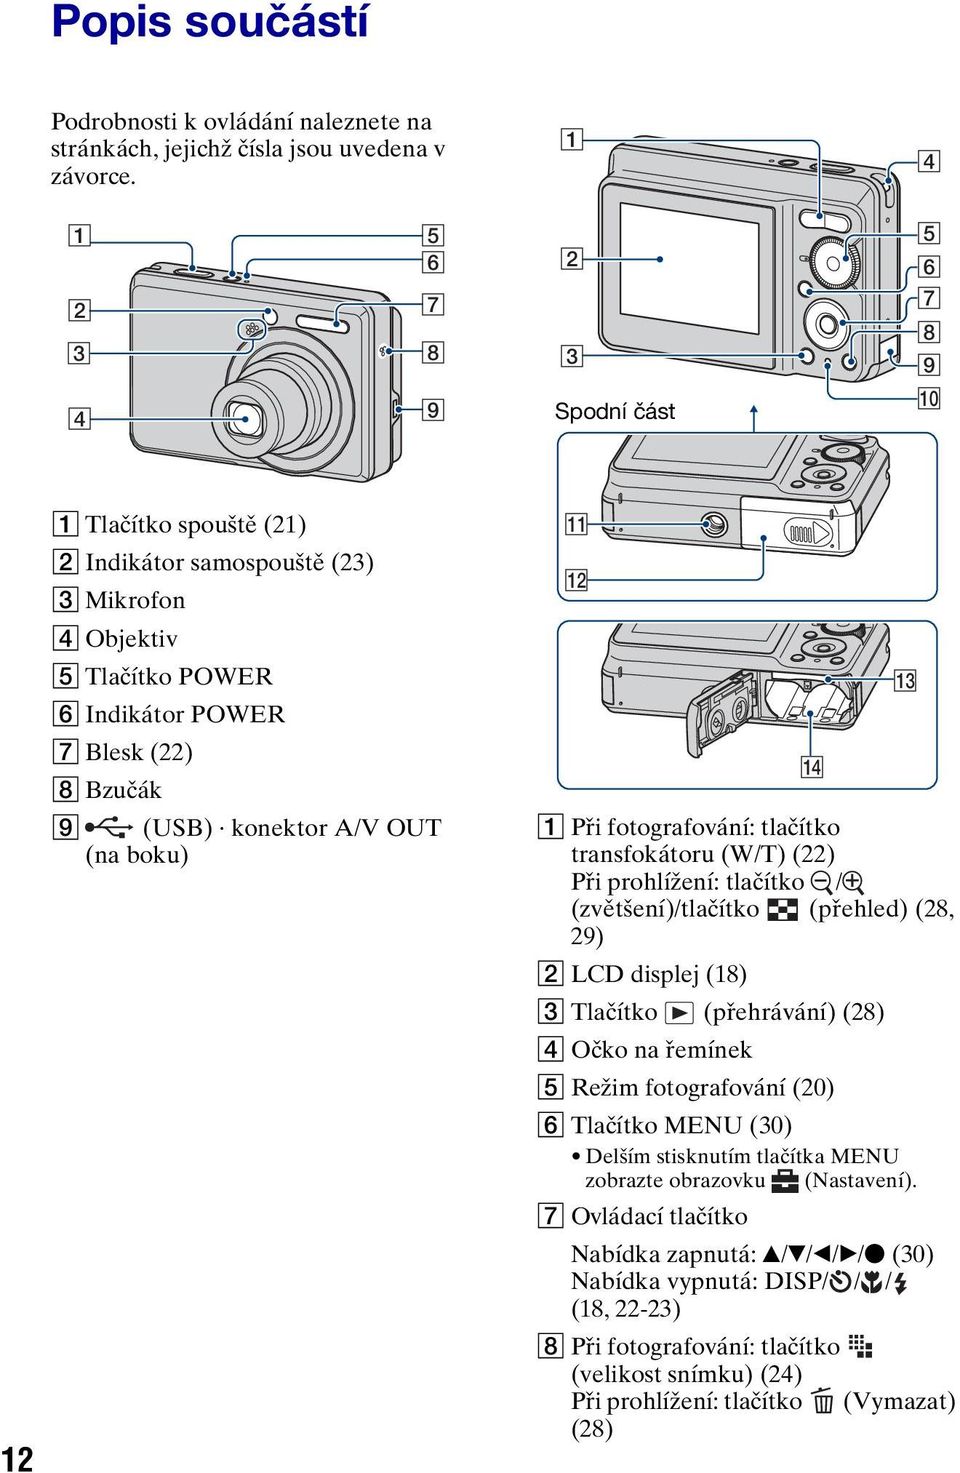 konektor A/V OUT (na boku) qa qs qf qd A Při fotografování: tlačítko transfokátoru (W/T) (22) Při prohlížení: tlačítko / (zvětšení)/tlačítko (přehled) (28, 29) B LCD displej (18) C Tlačítko